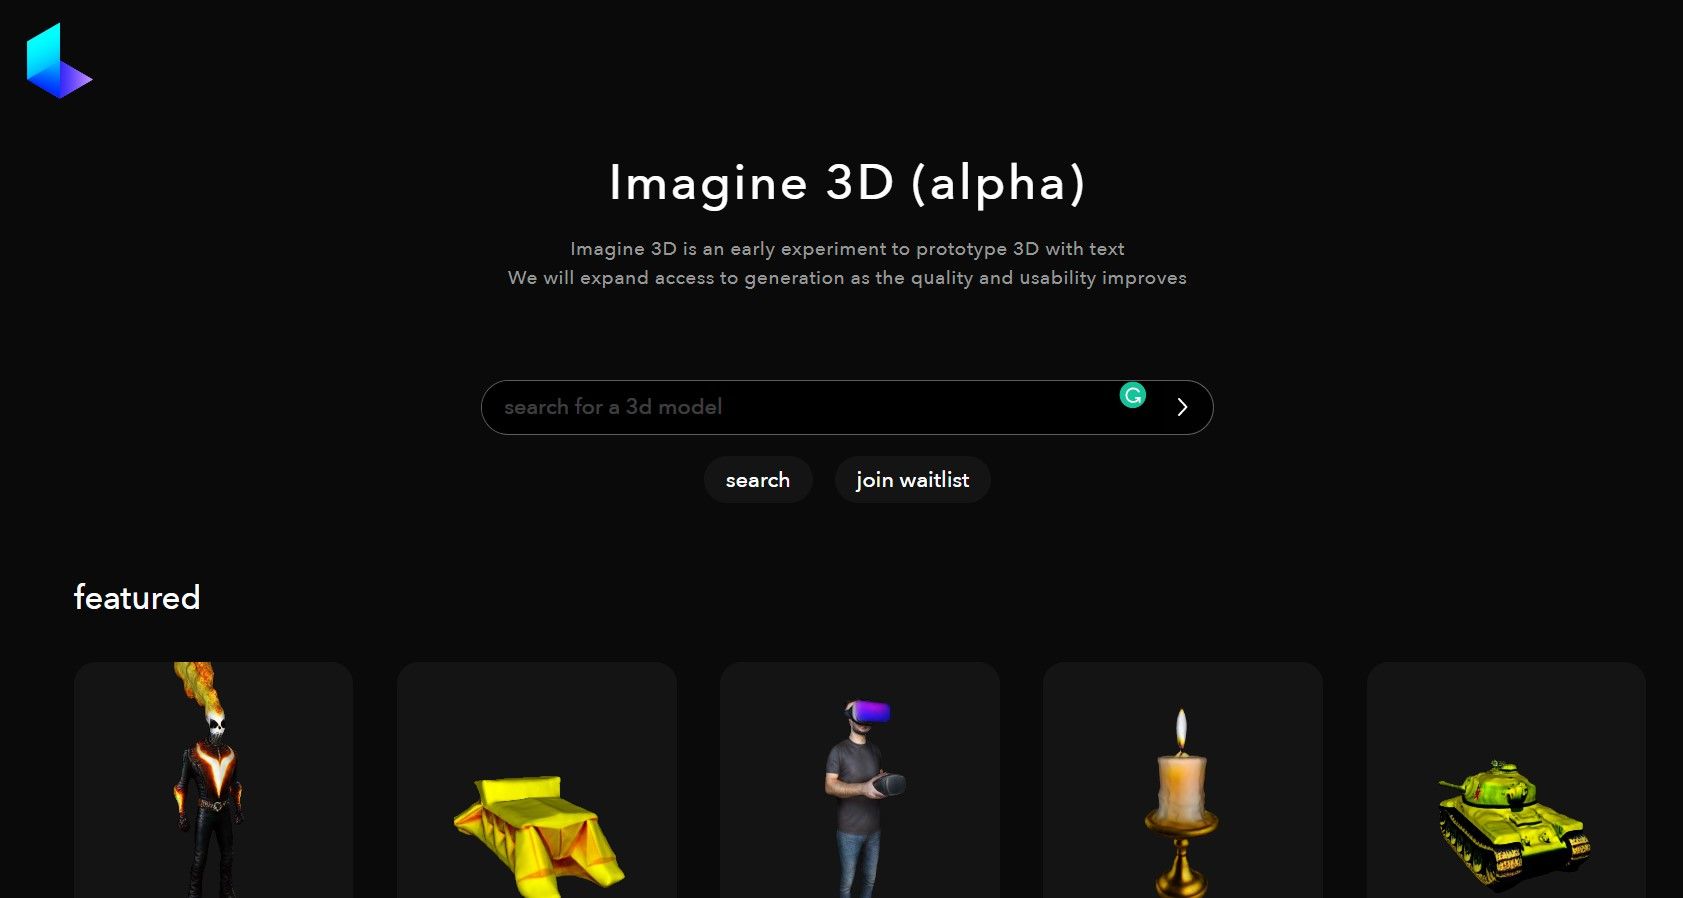 Post: Imagine 3D